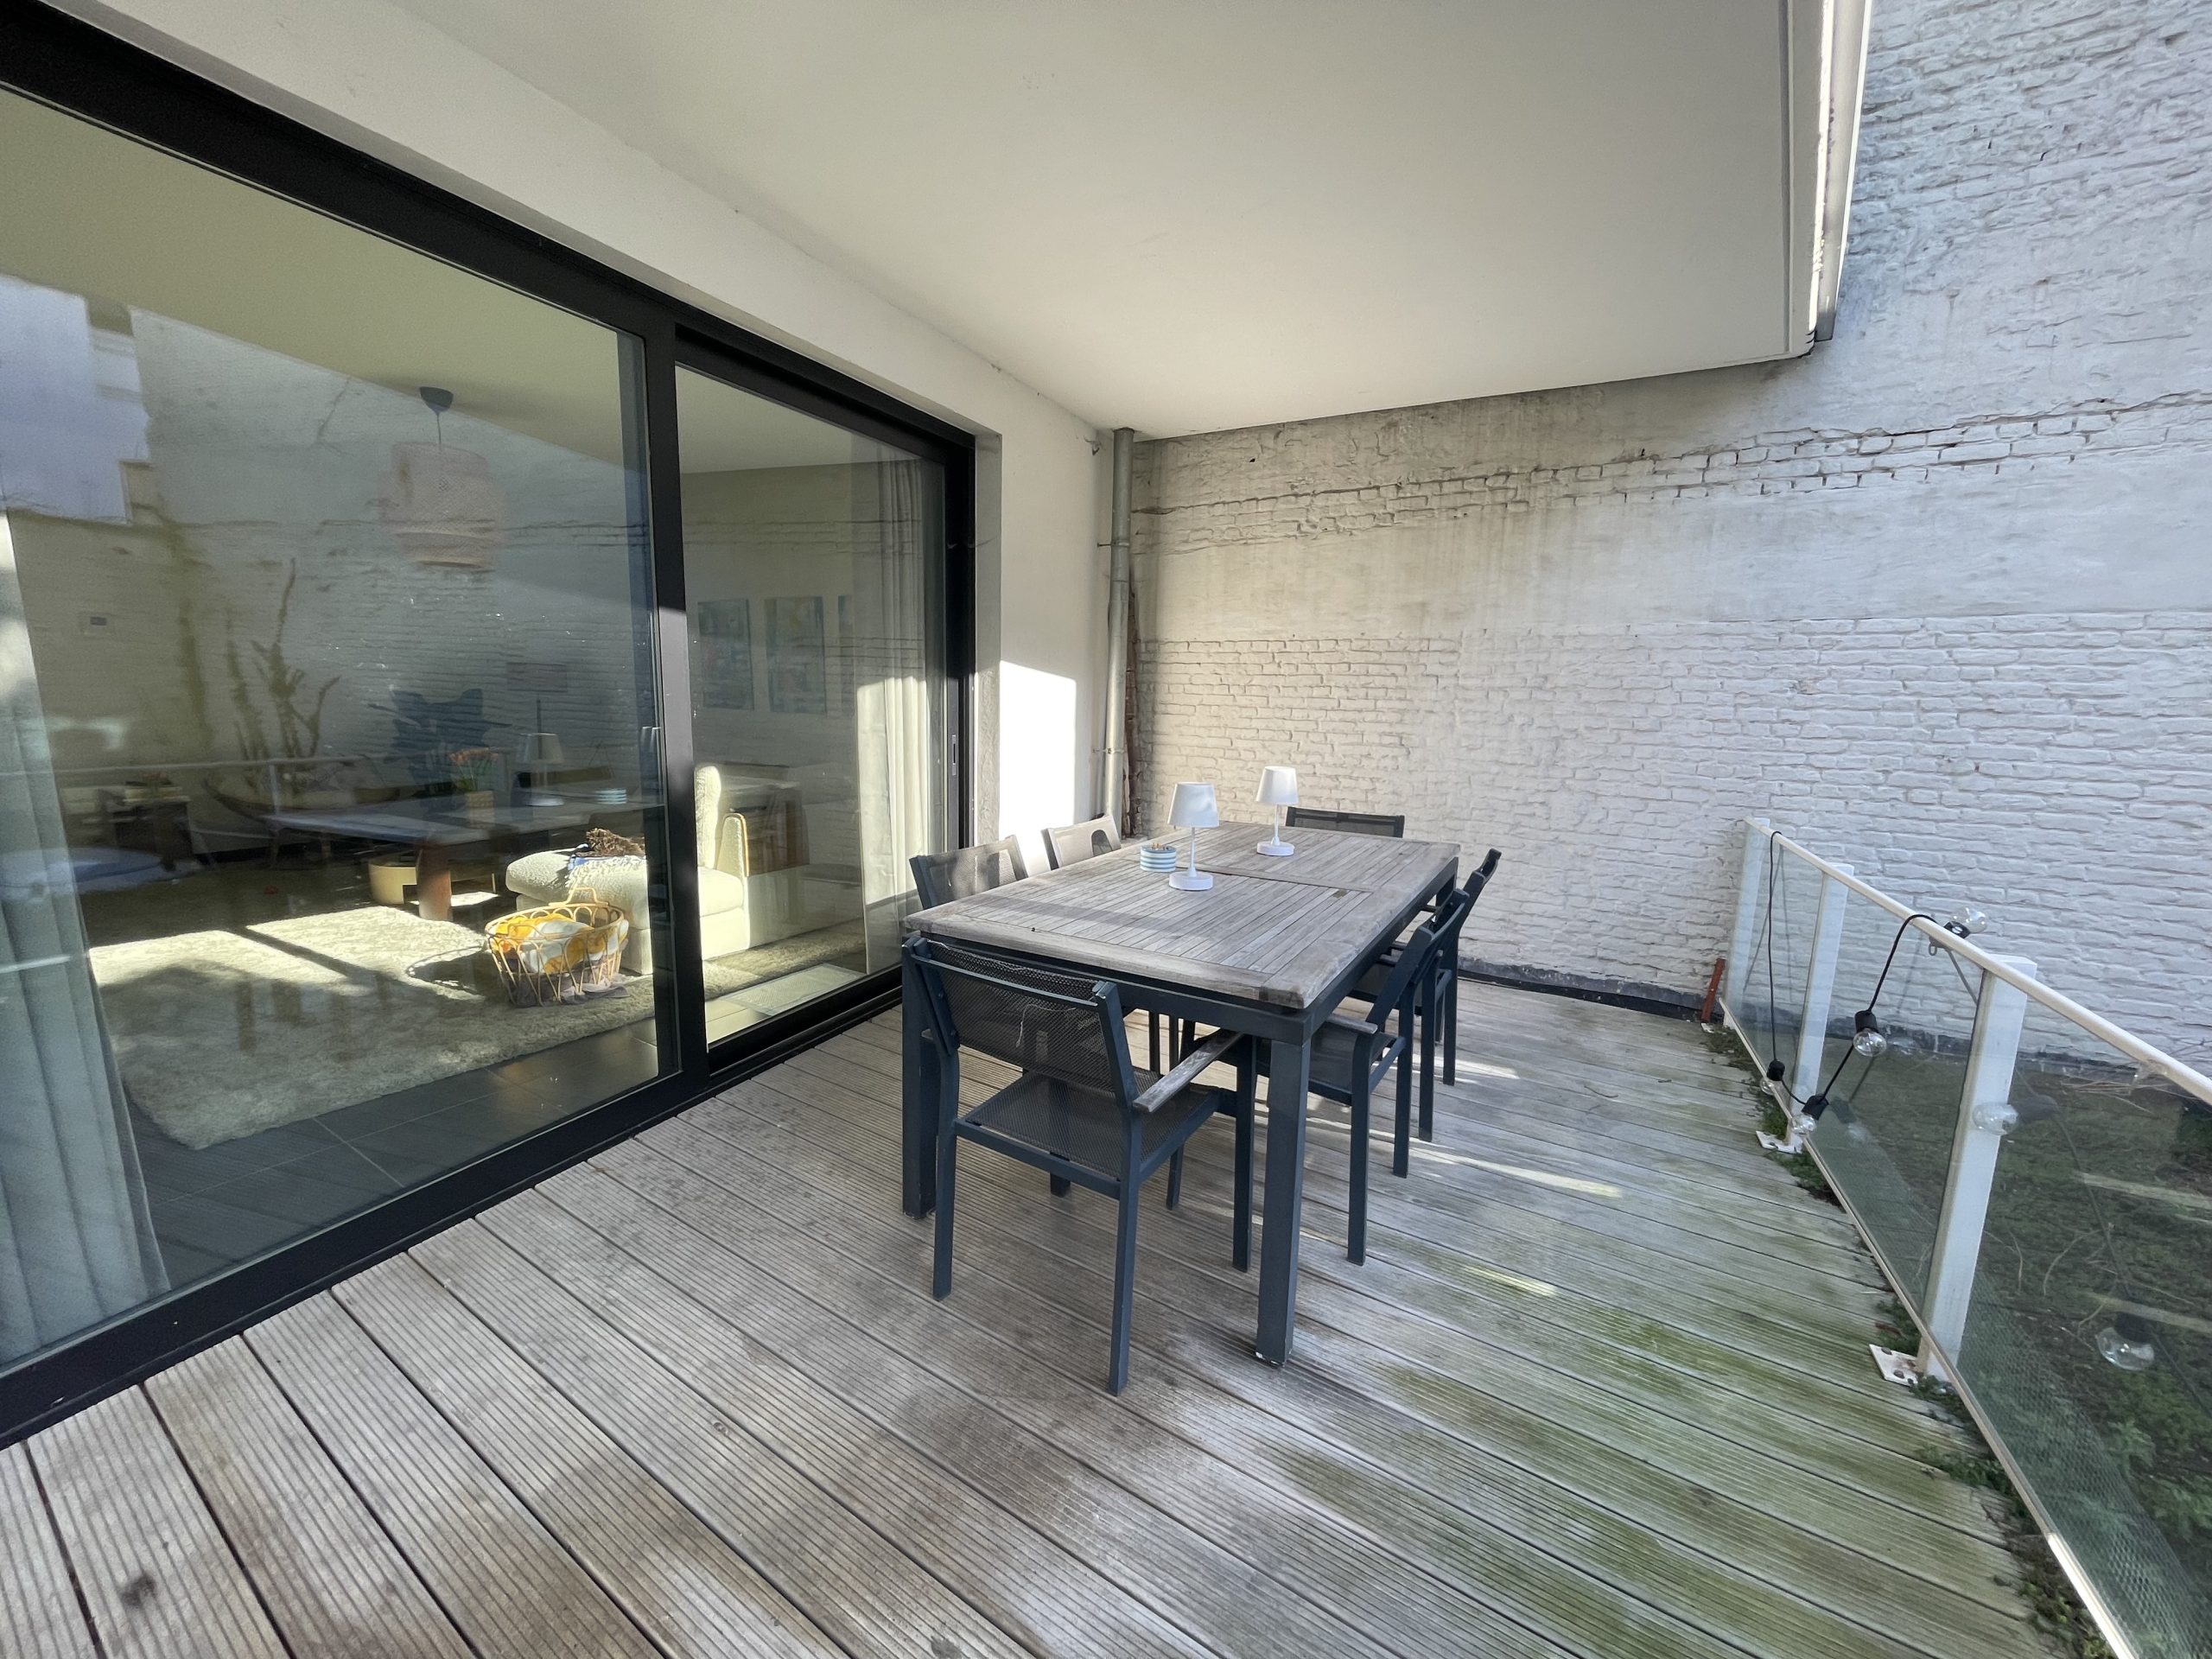 apartment for rent in antwerp - terrace